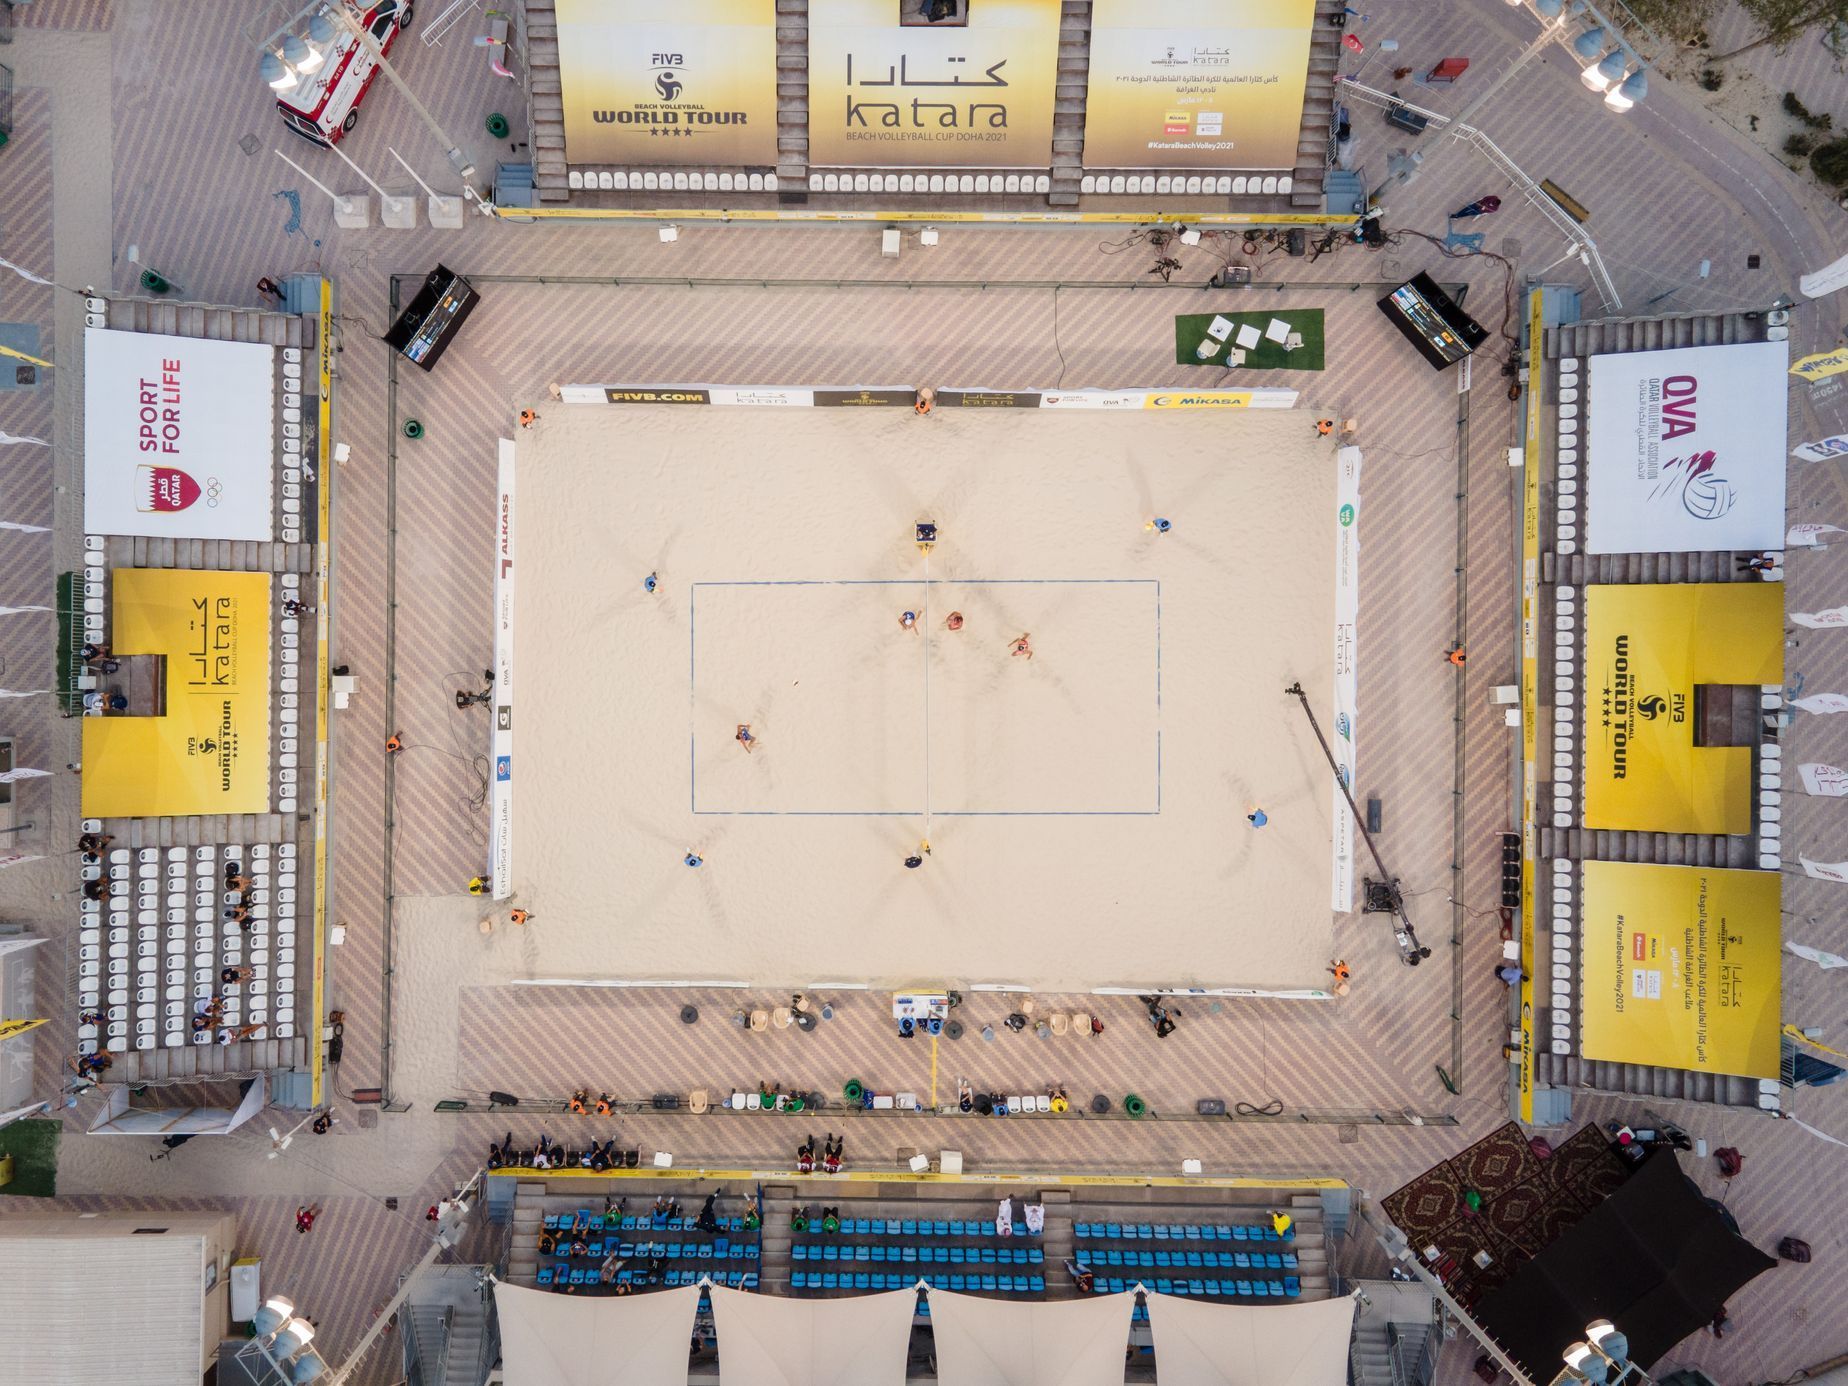 plážový volejbal, Světový okruh 2021, Katara Cup, Dauhá